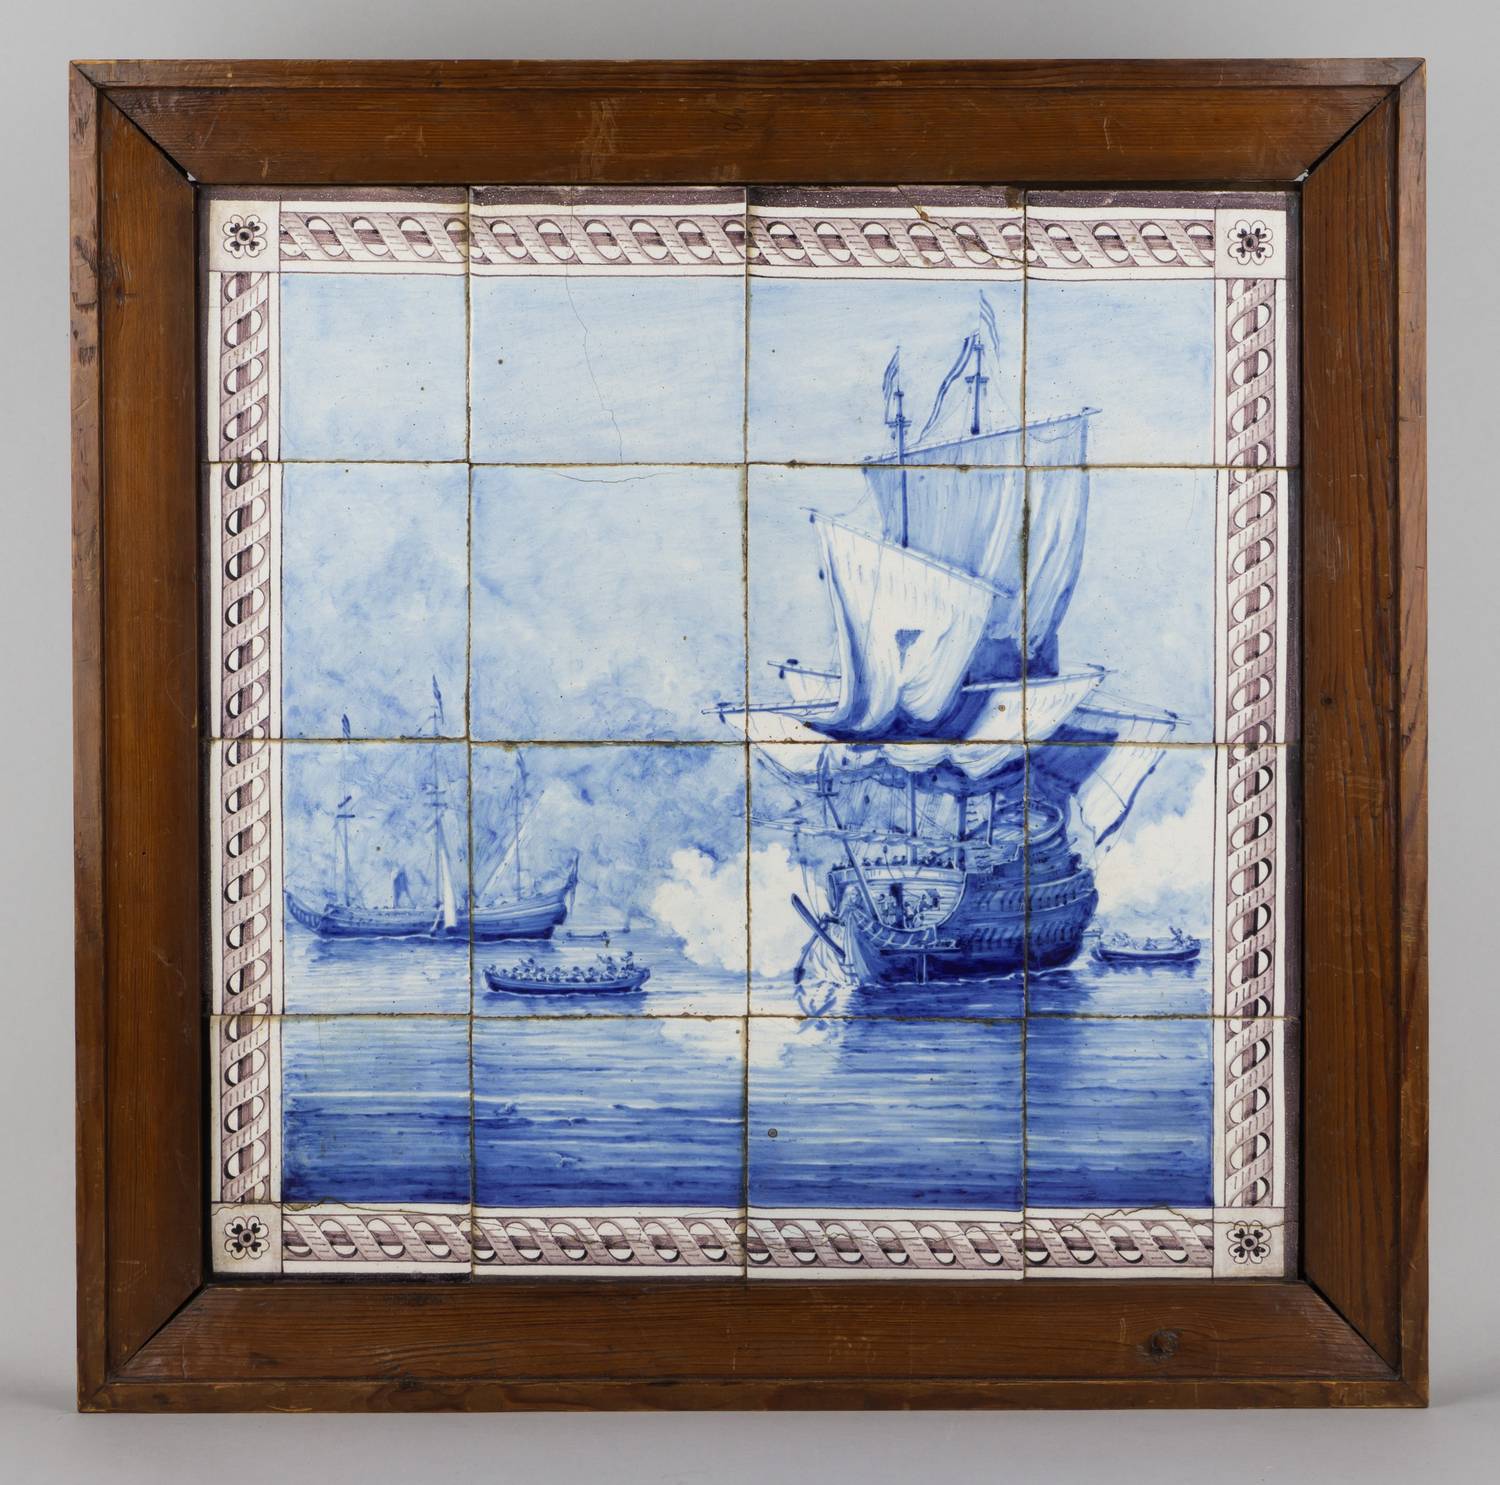 Панно из изразцов изображением парусников на море.<br>Голландия, конец XIX века.